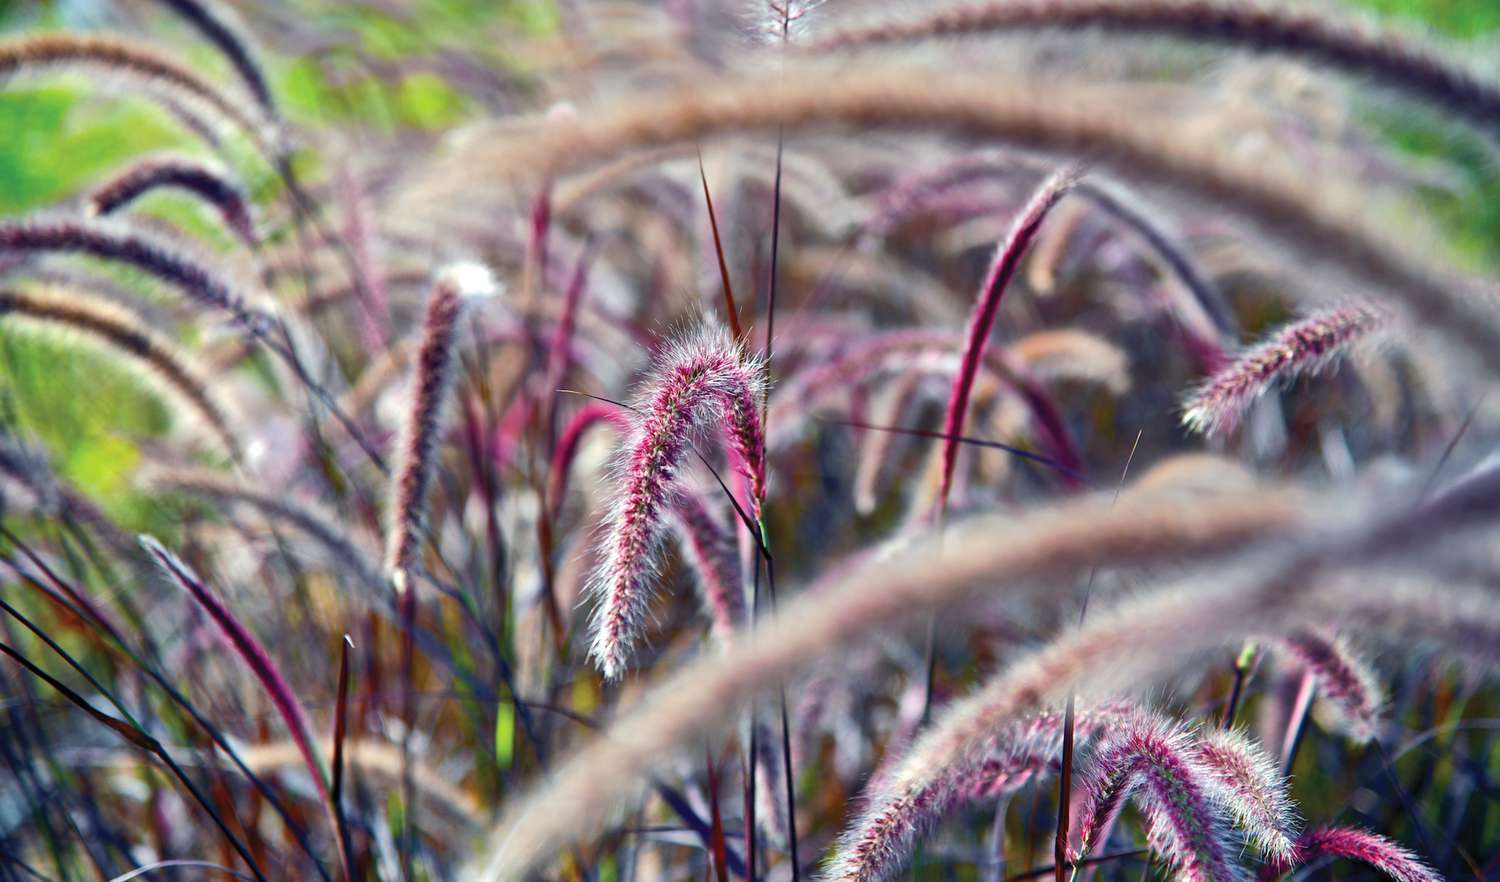 hierba de la fuente púrpura - Pennisetum Setaceum 'rubrum'